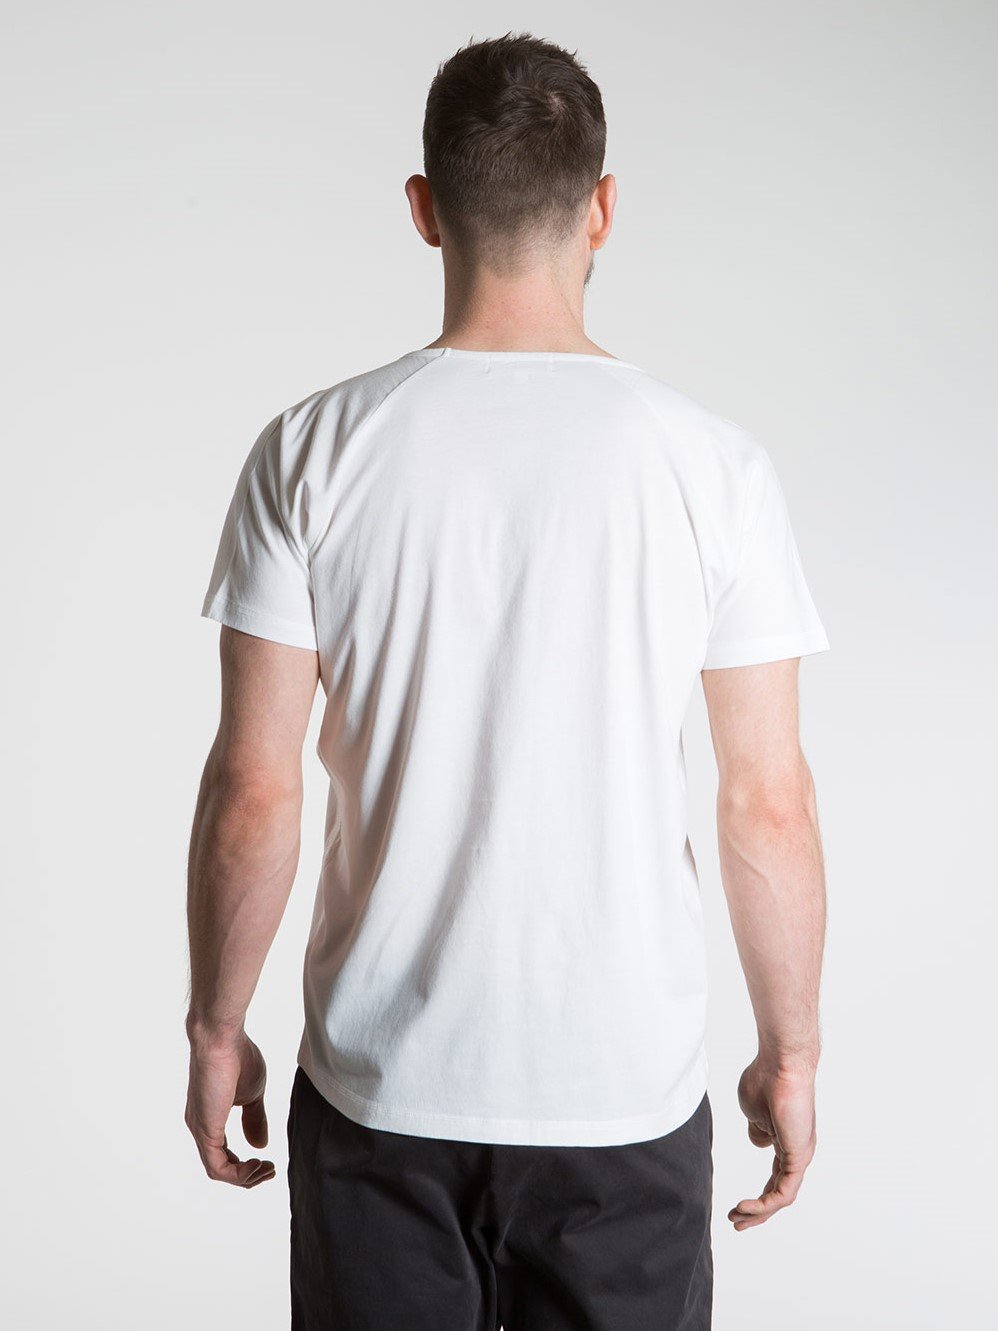 SO WE FLOW... soweflow... Short Sleeve Tee Men's Yoga Top Logo T-Shirt White Natural - Activemen Clothing